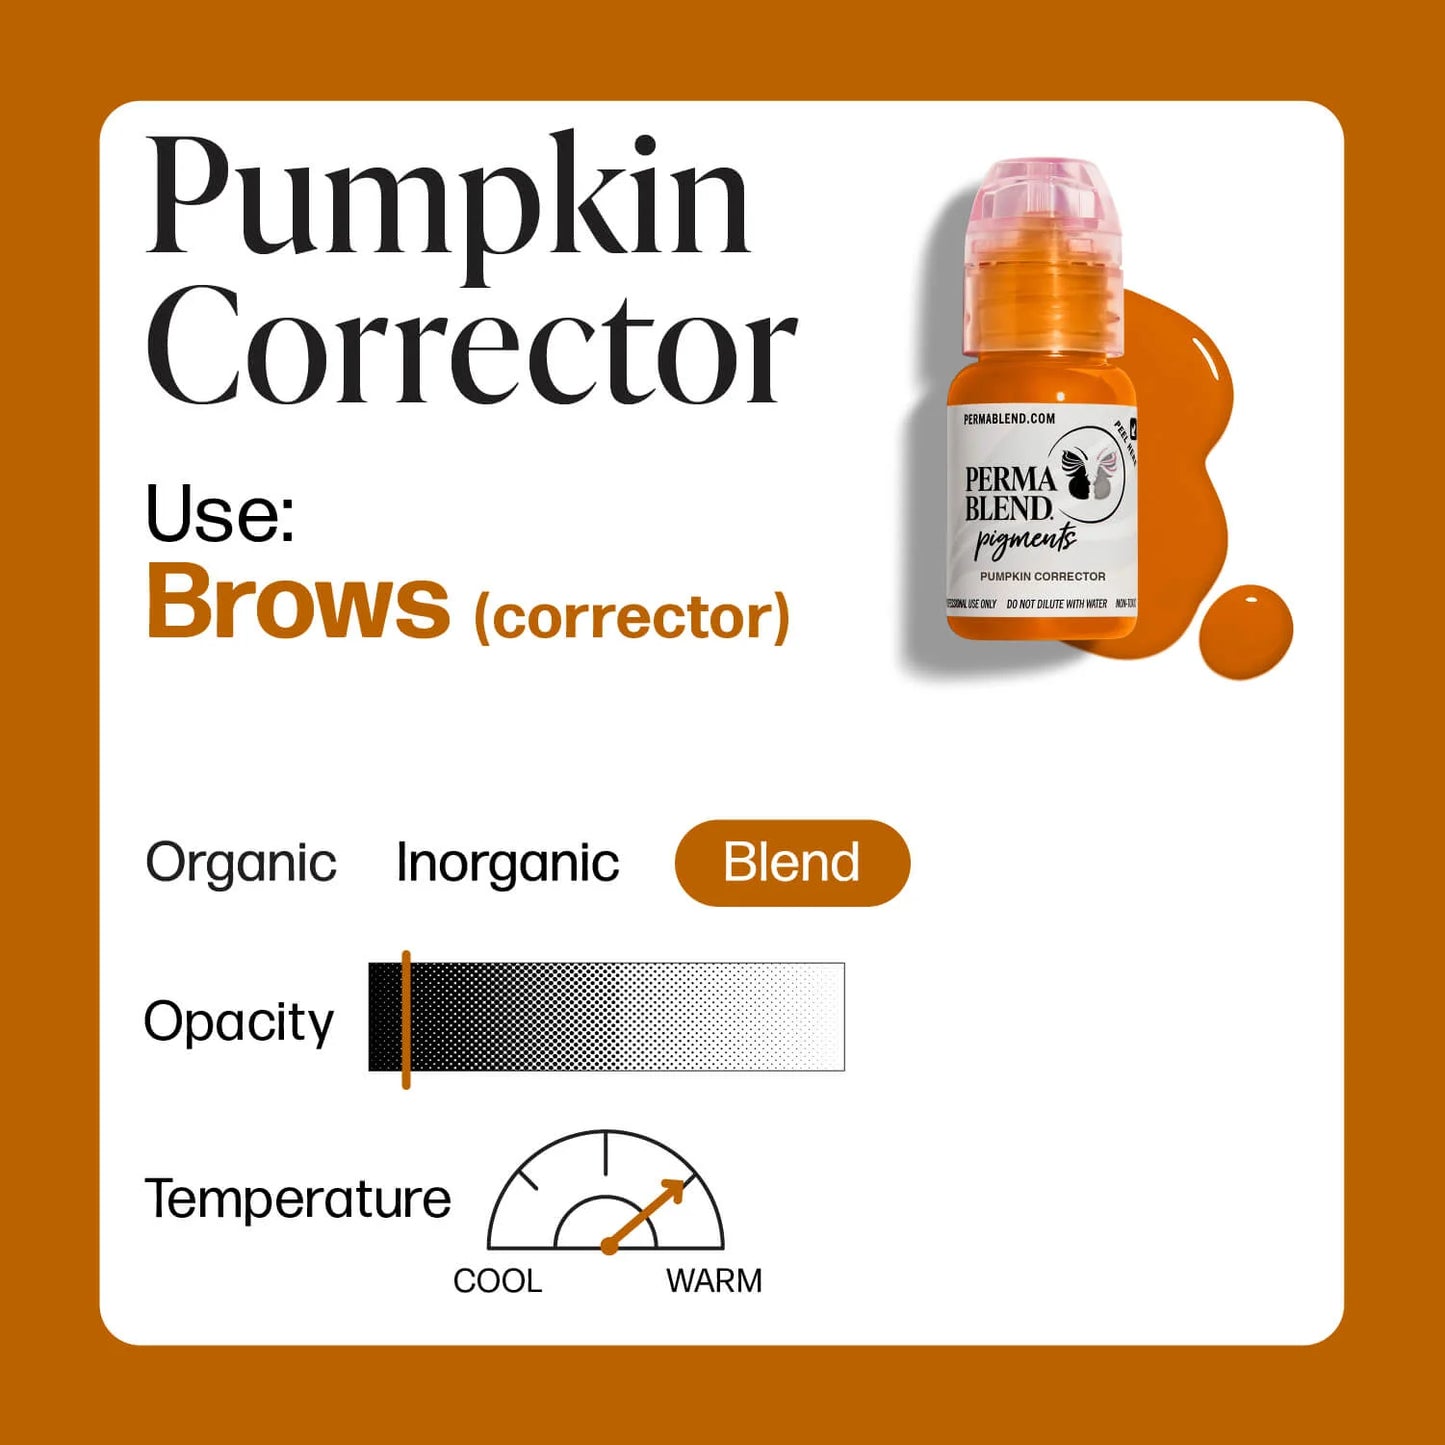 Pumpkin Corrector